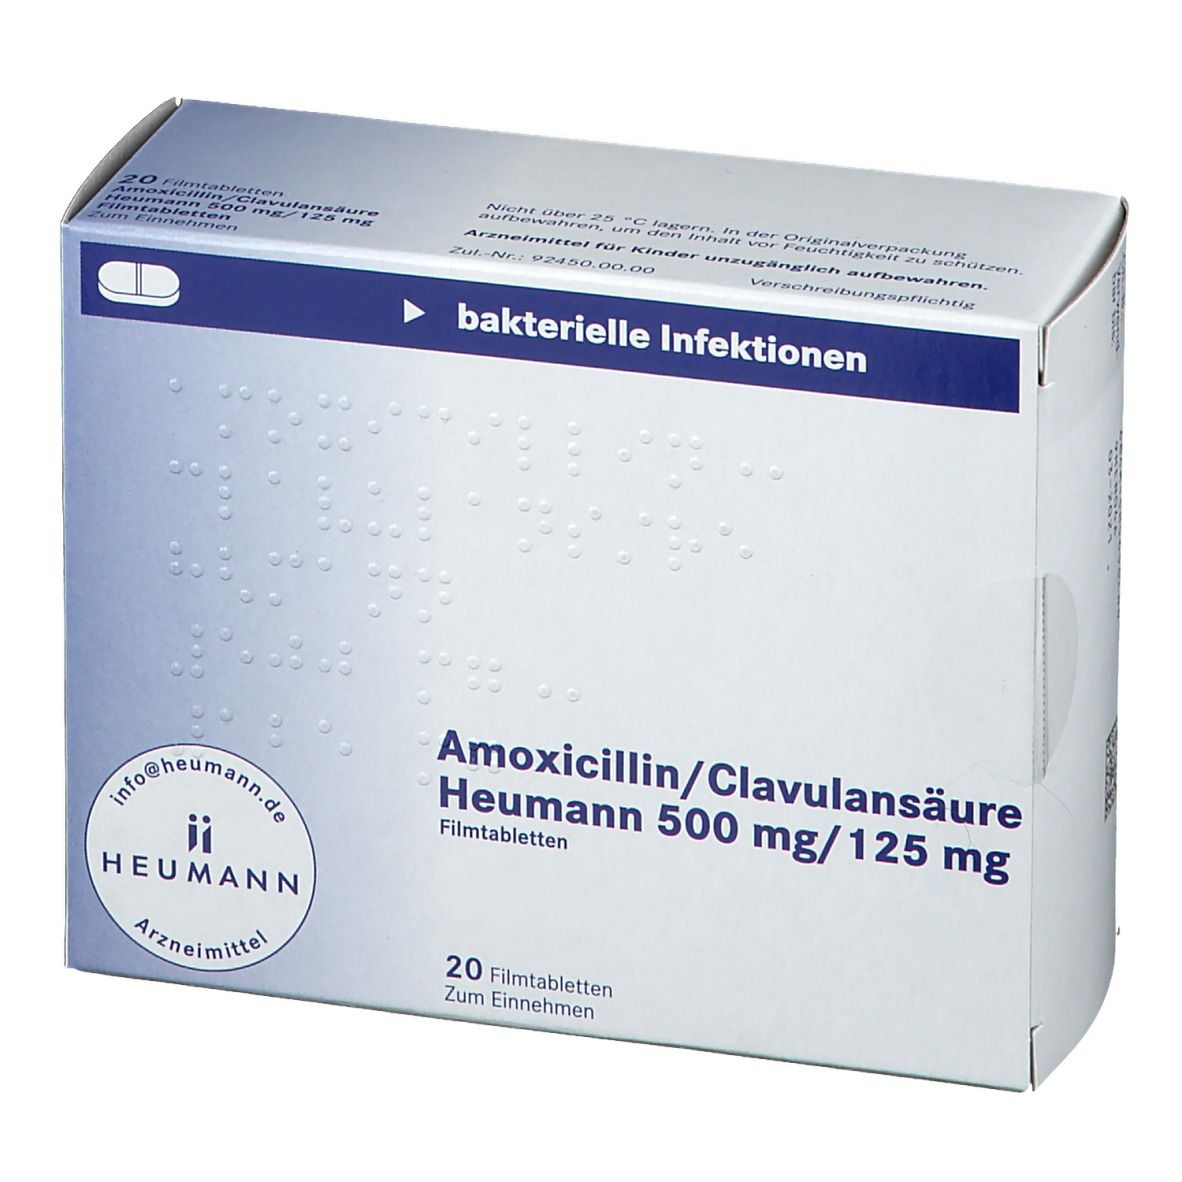 Amoxicillin/Clavulansäure Heumann 500 mg/125 mg